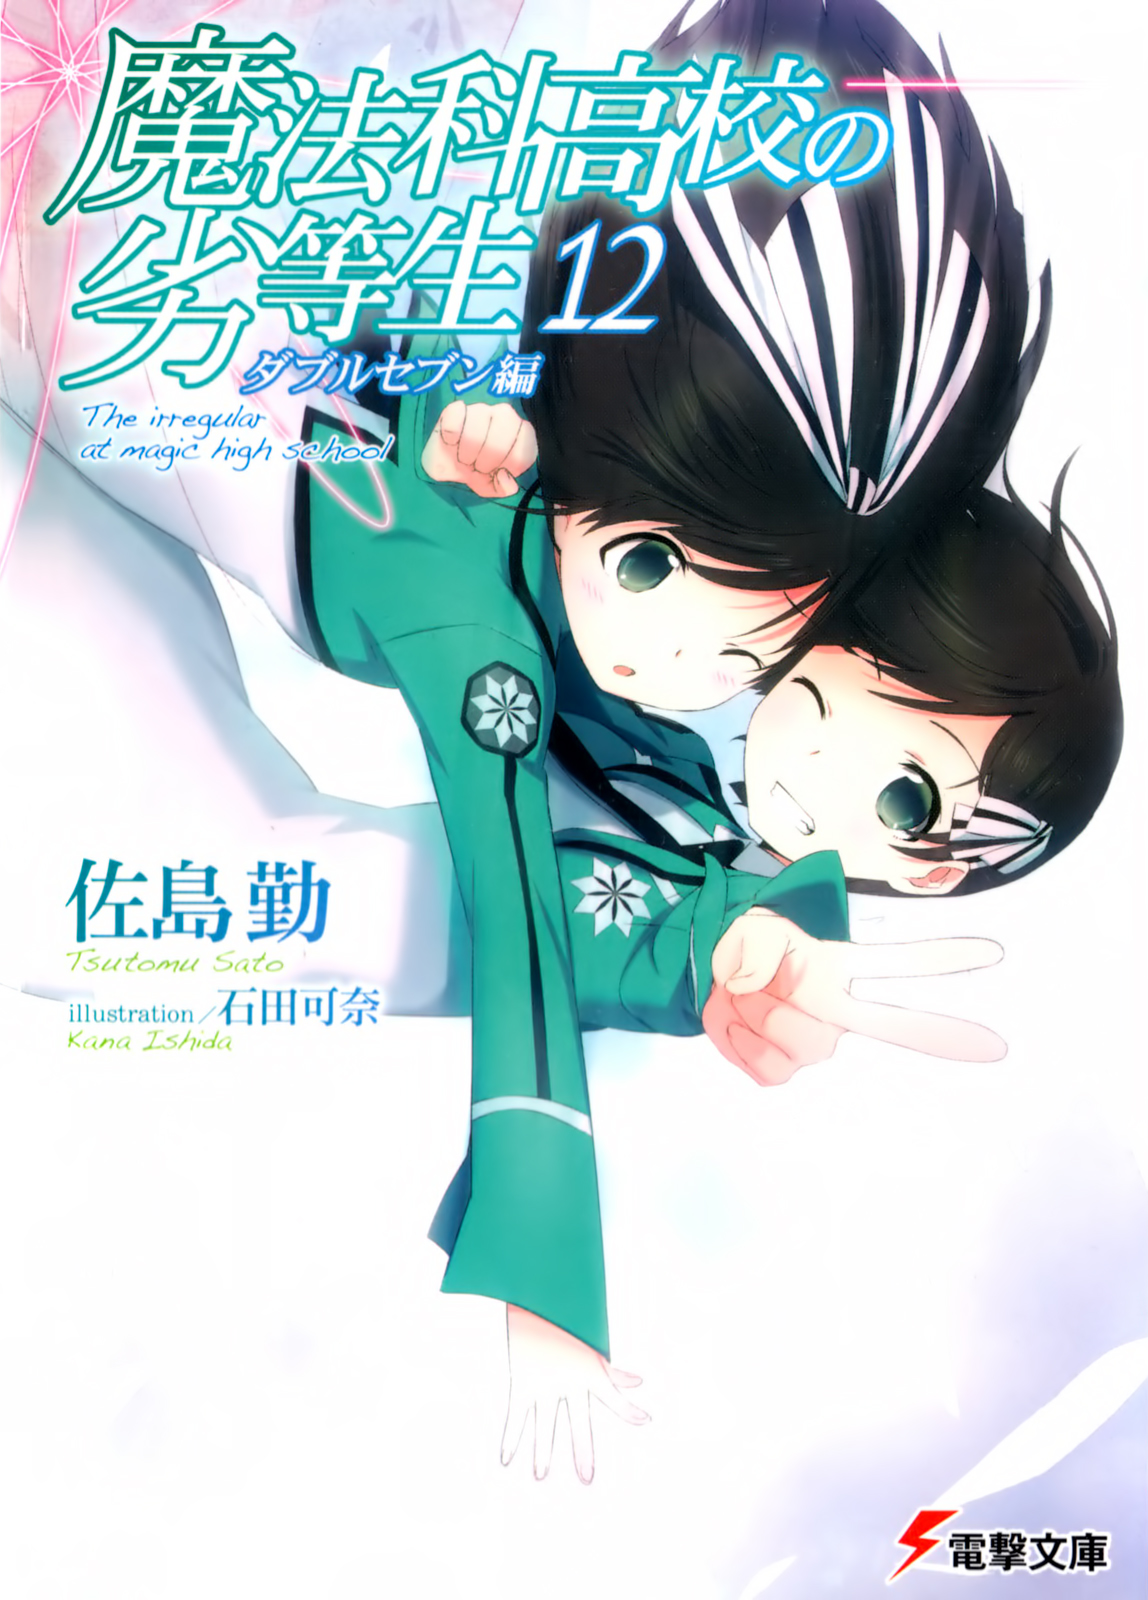 Mahouka koukou no rettousei light novel english pdf